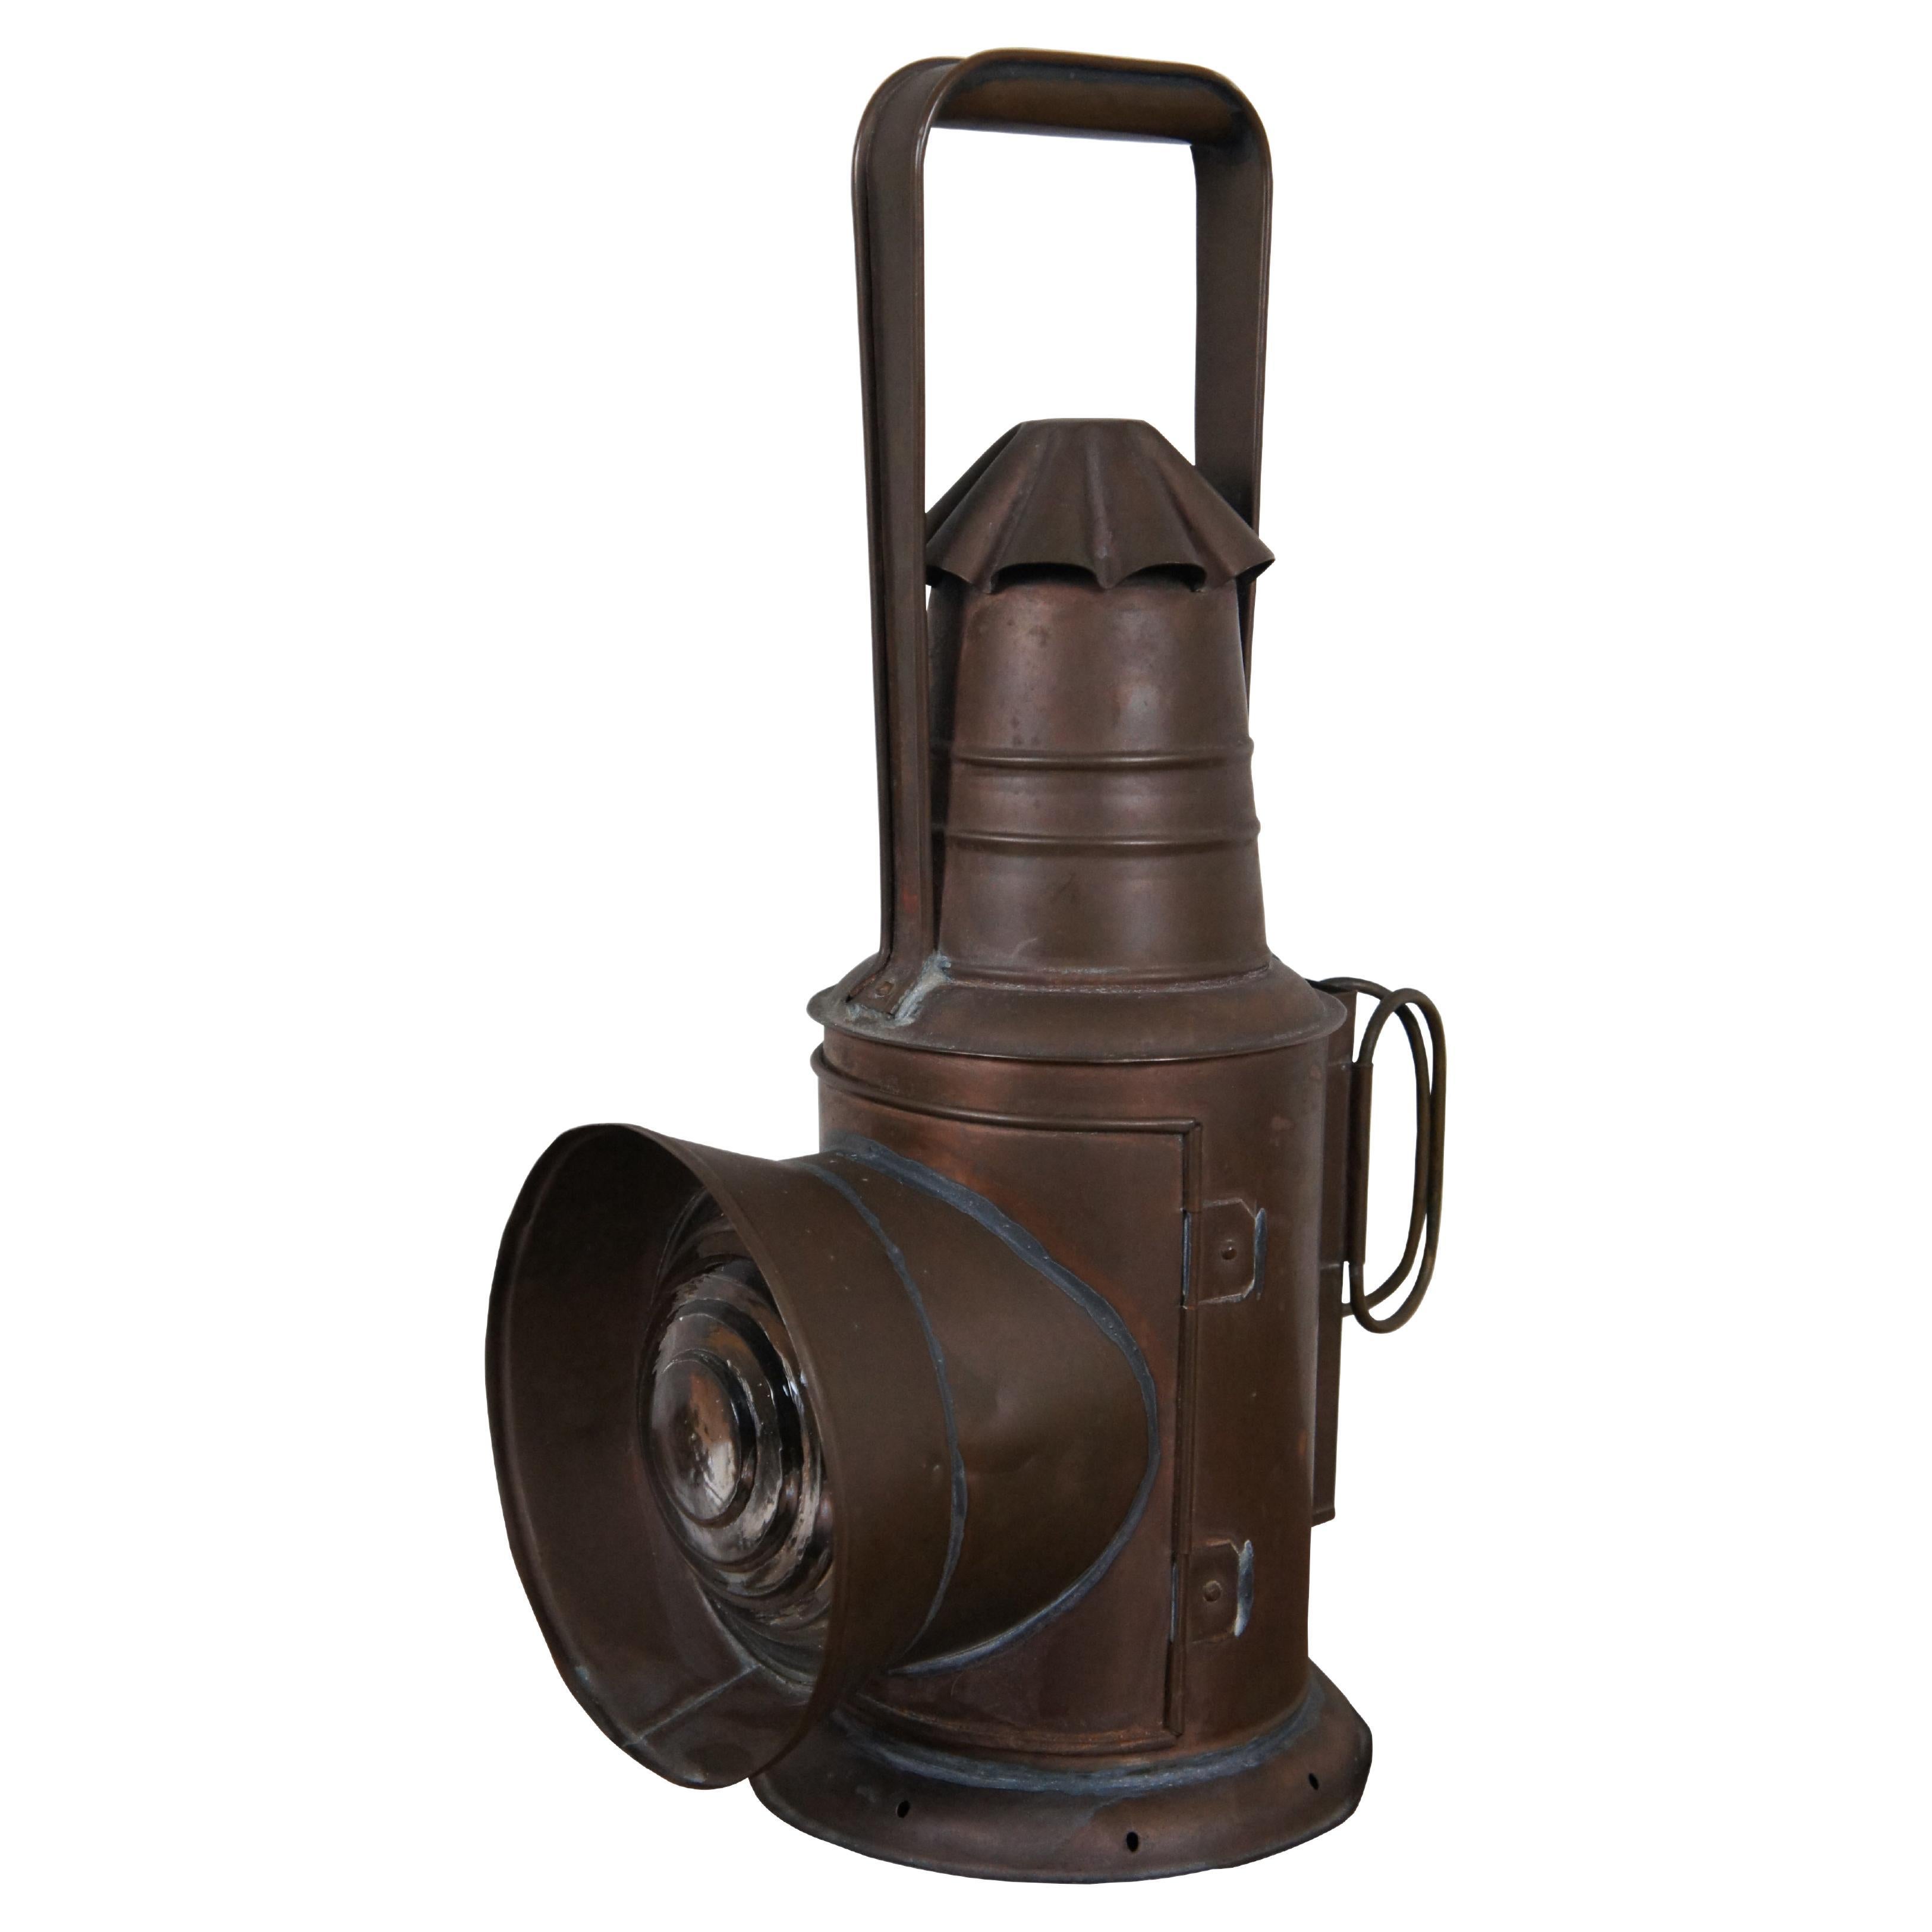 Antique Japanese Copper Bullseye Railway Boat Lantern Police Signal Oil Lamp 13" For Sale